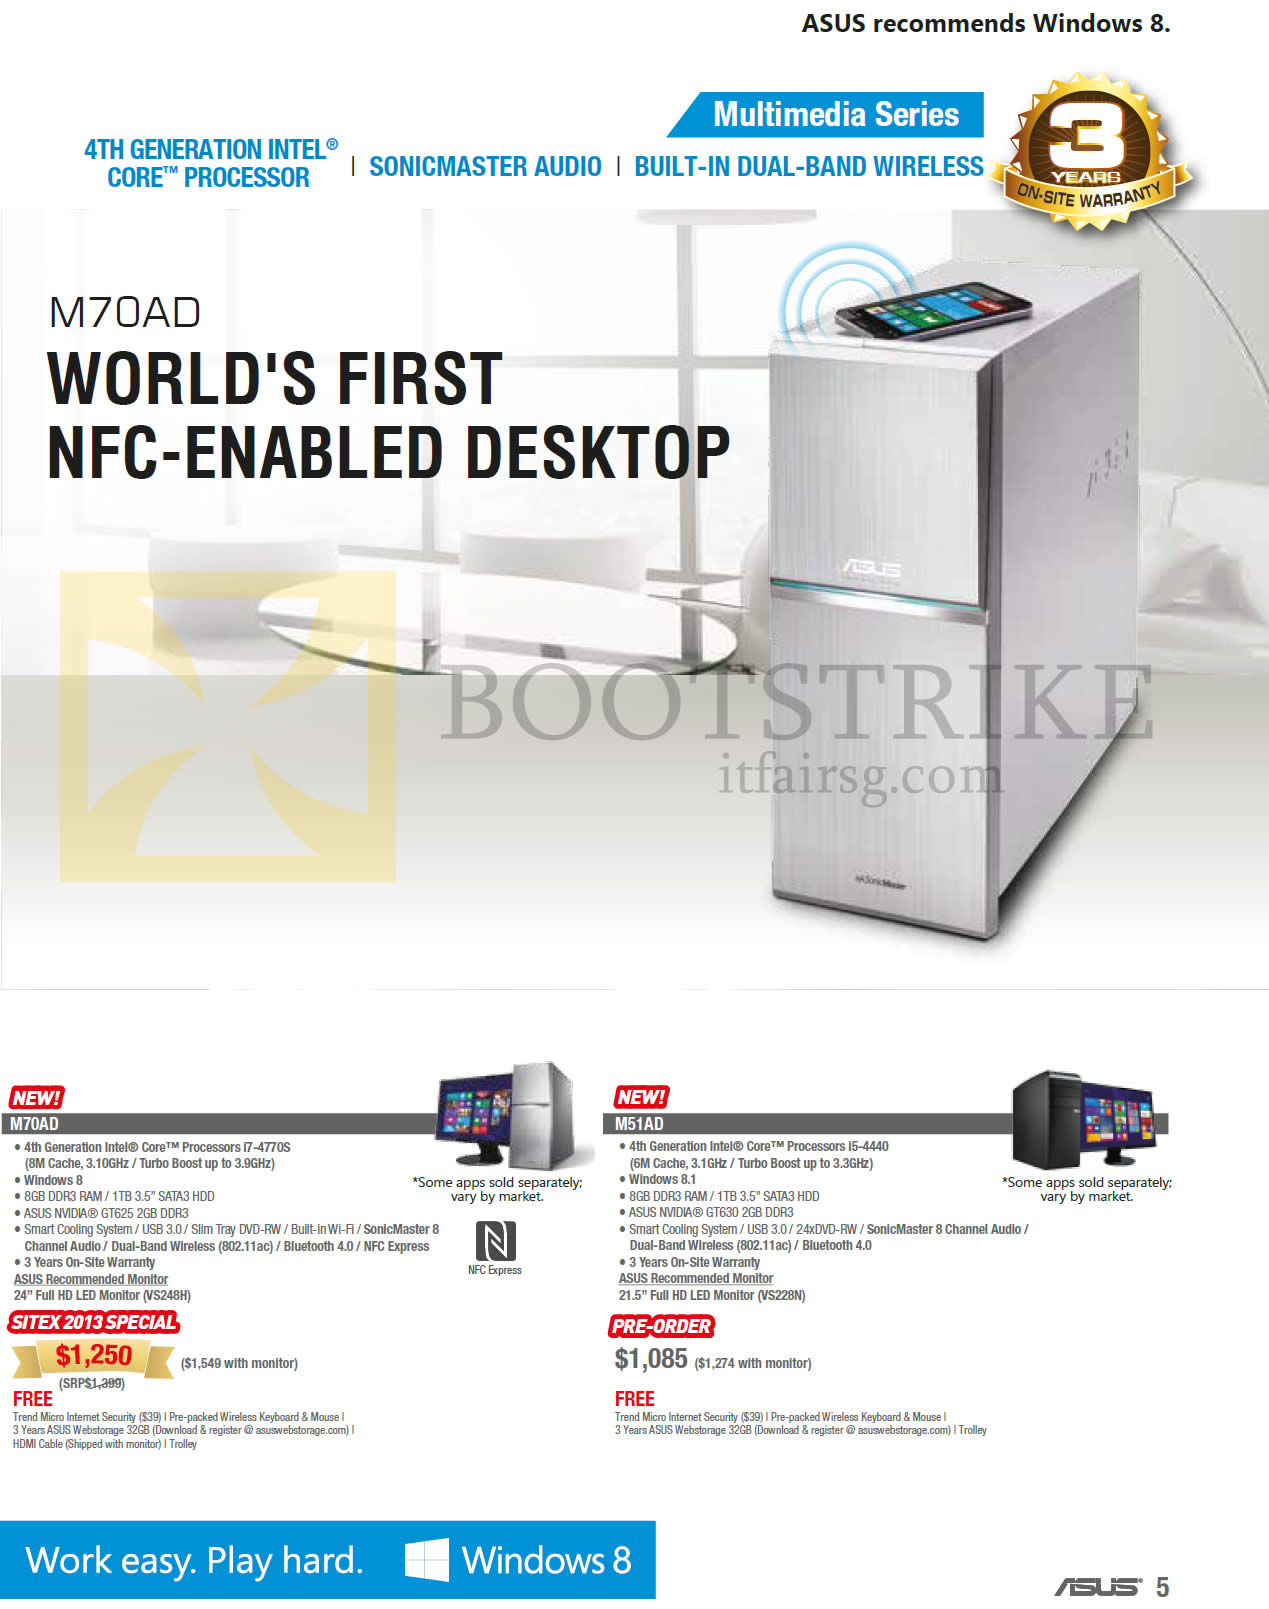 SITEX 2013 price list image brochure of ASUS Desktop PCs M70Ad, M51AD, NFC Enabled